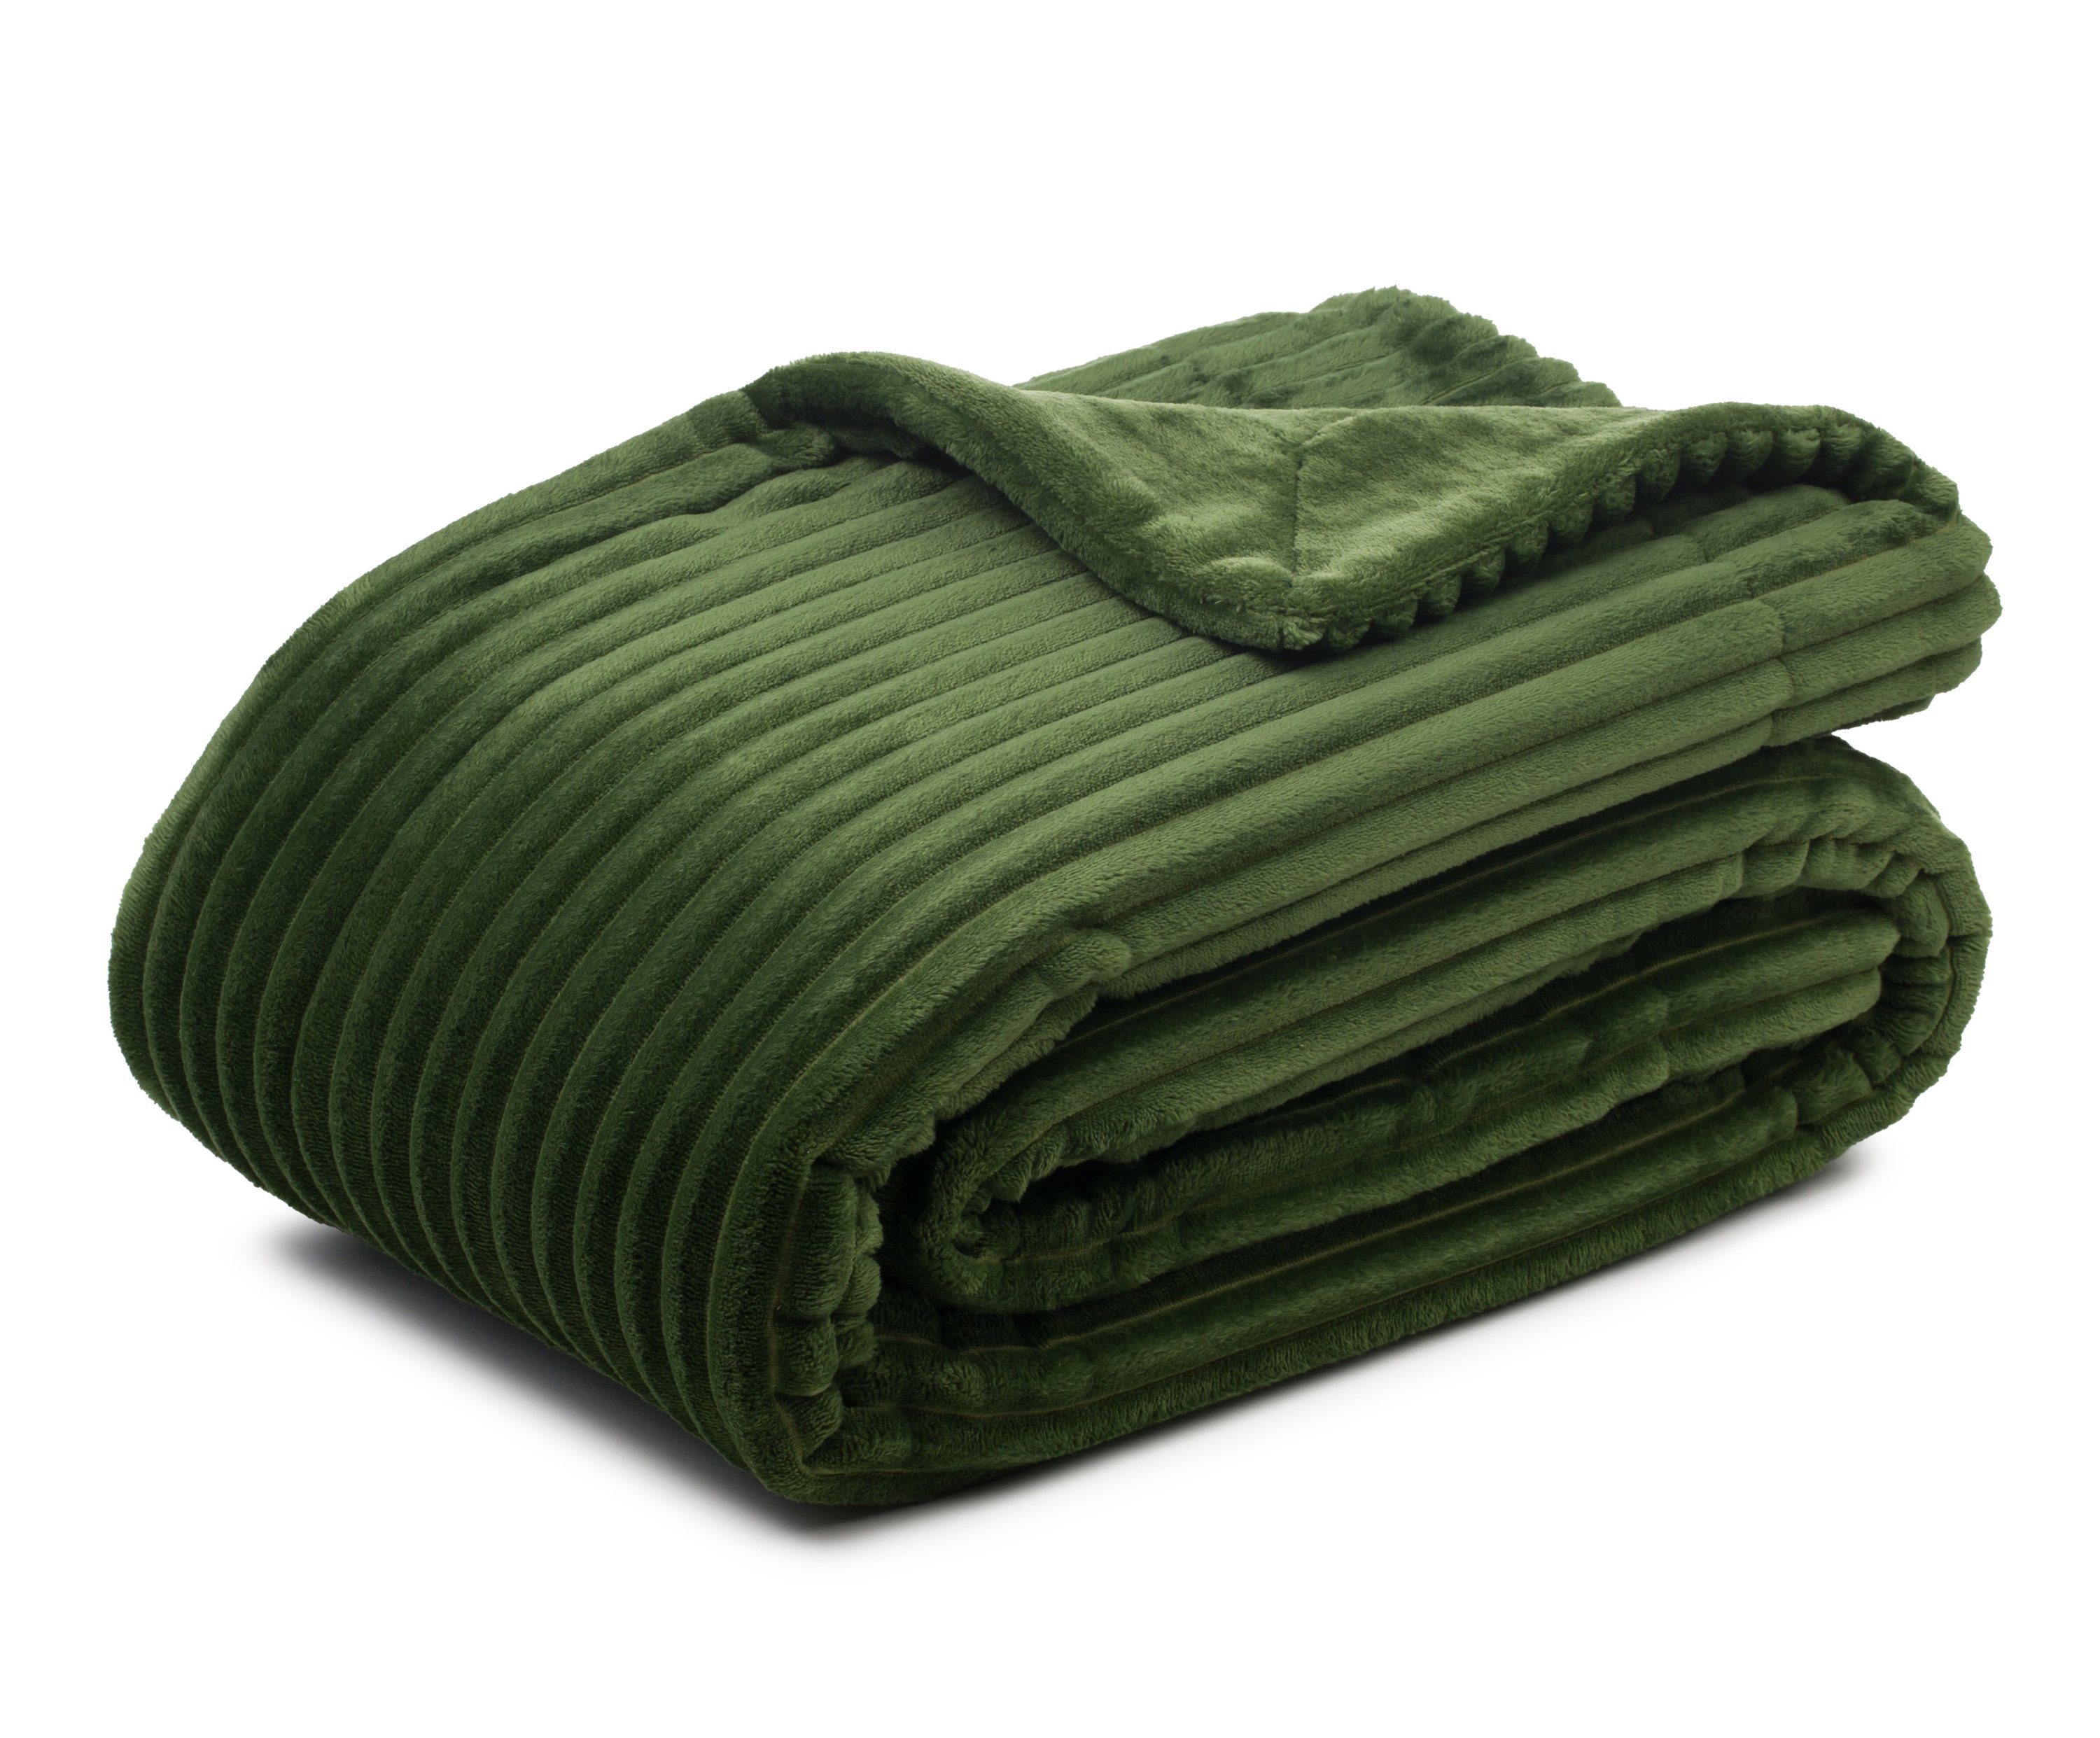 Bettdecke + 150x200 grün 150x200 Füllung: BL Wohndecke cm Gözze, CORD Kuscheldecke Plate Decke, grün Couchdecke Topper, (BL Sofadecke Decke cm) GÖZZE